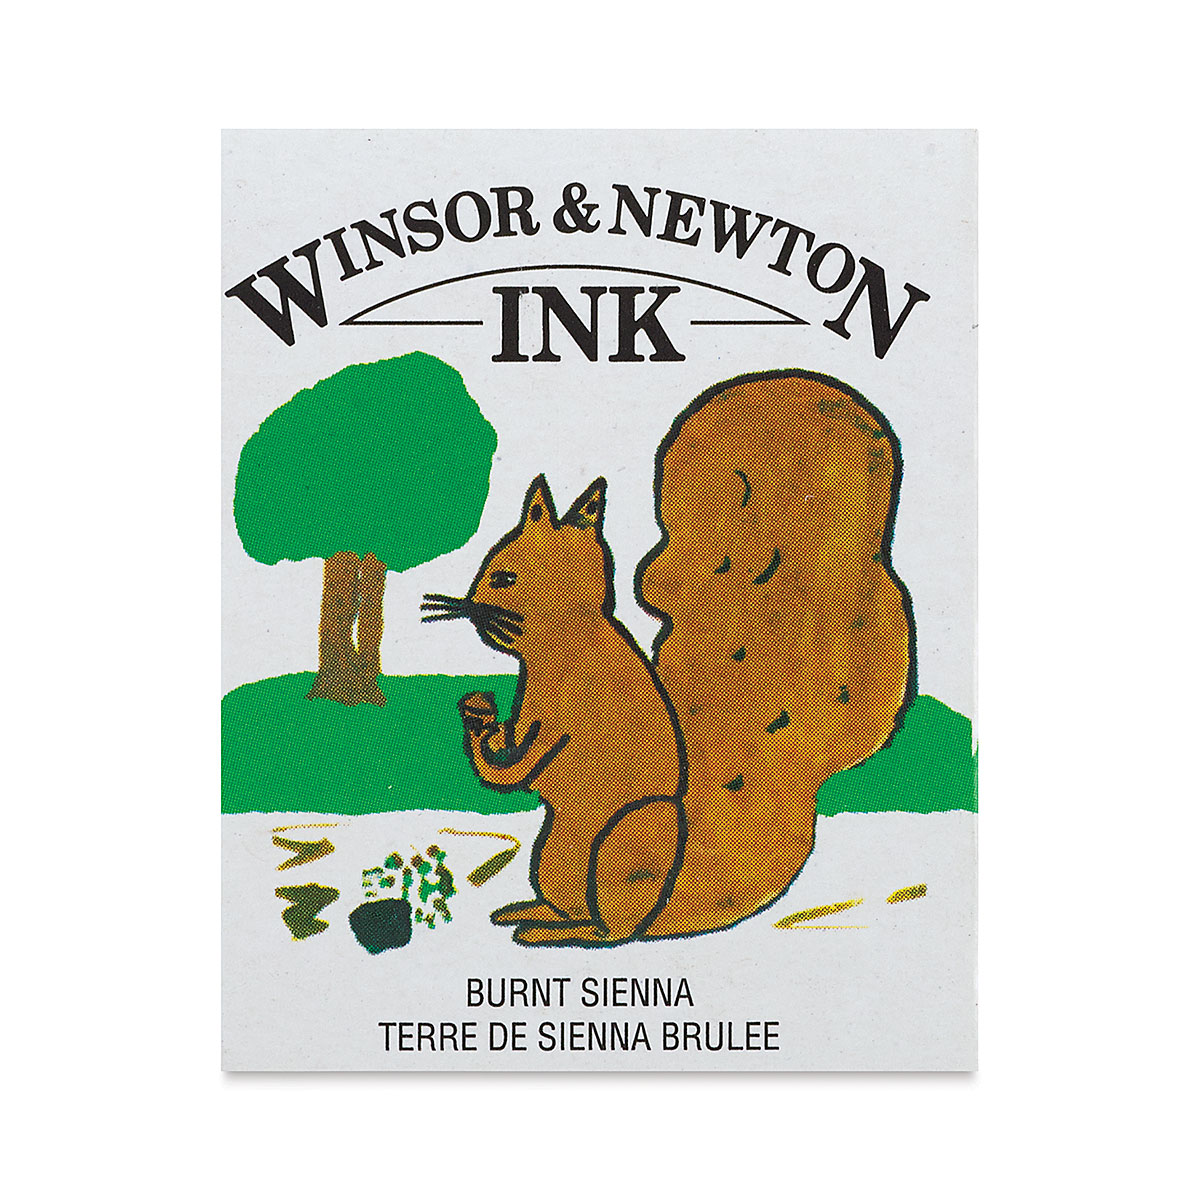 Winsor & Newton Drawing Ink - 30 ml, Liquid Indian